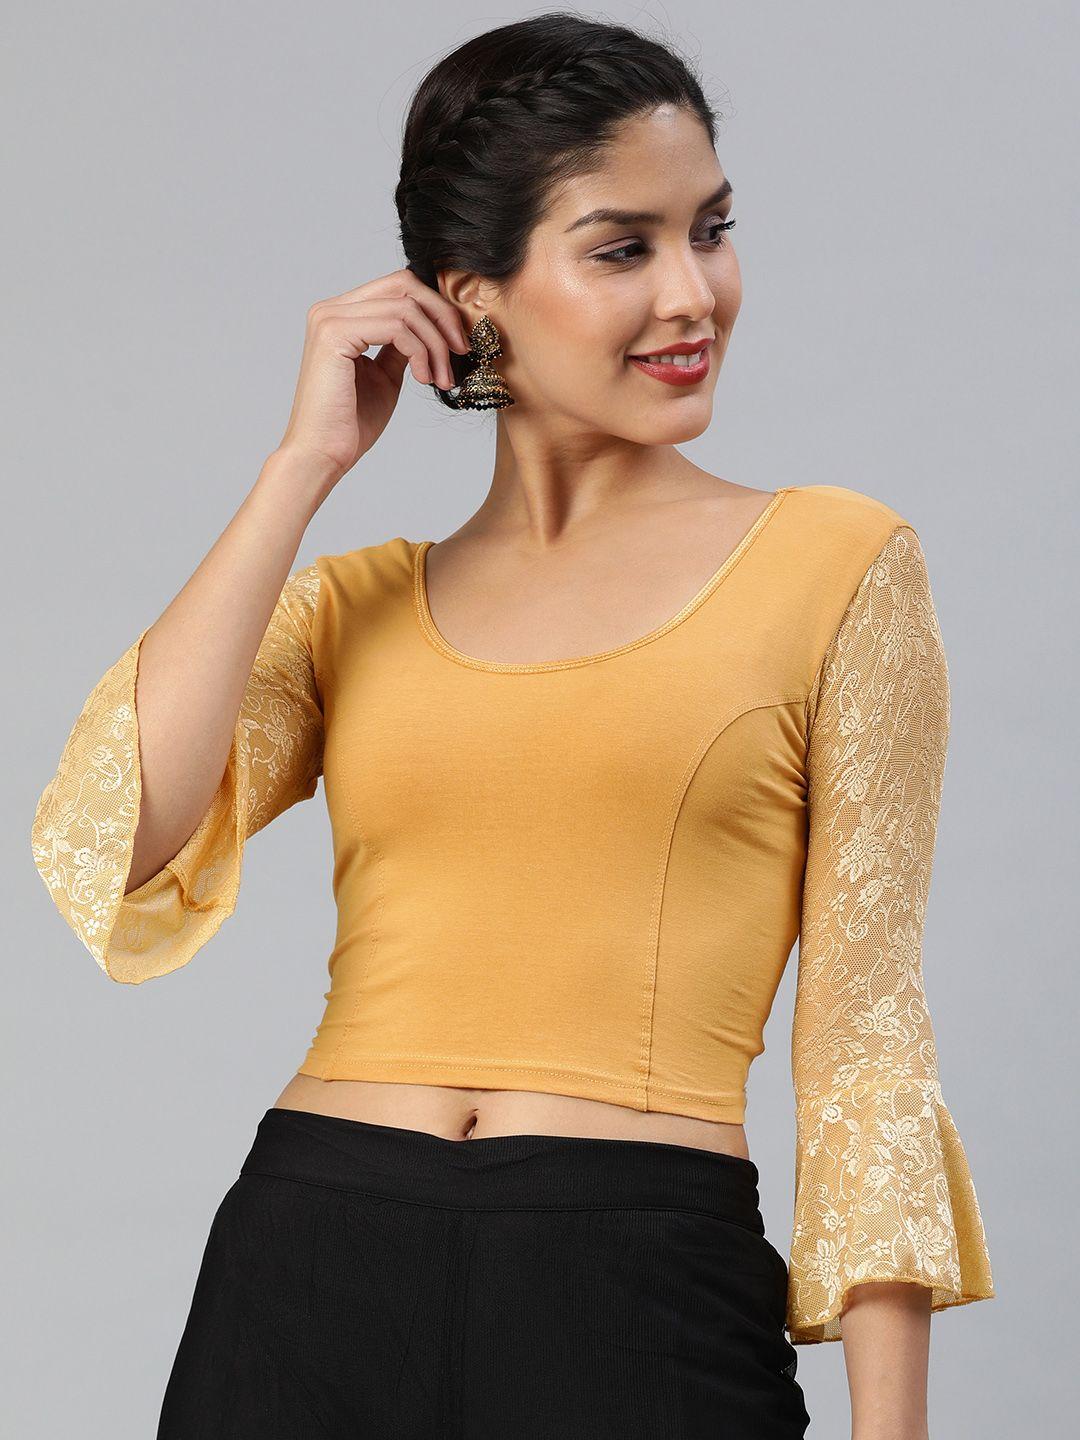 inddus-beige-cotton-stretch-saree-blouse-with-lace-detail